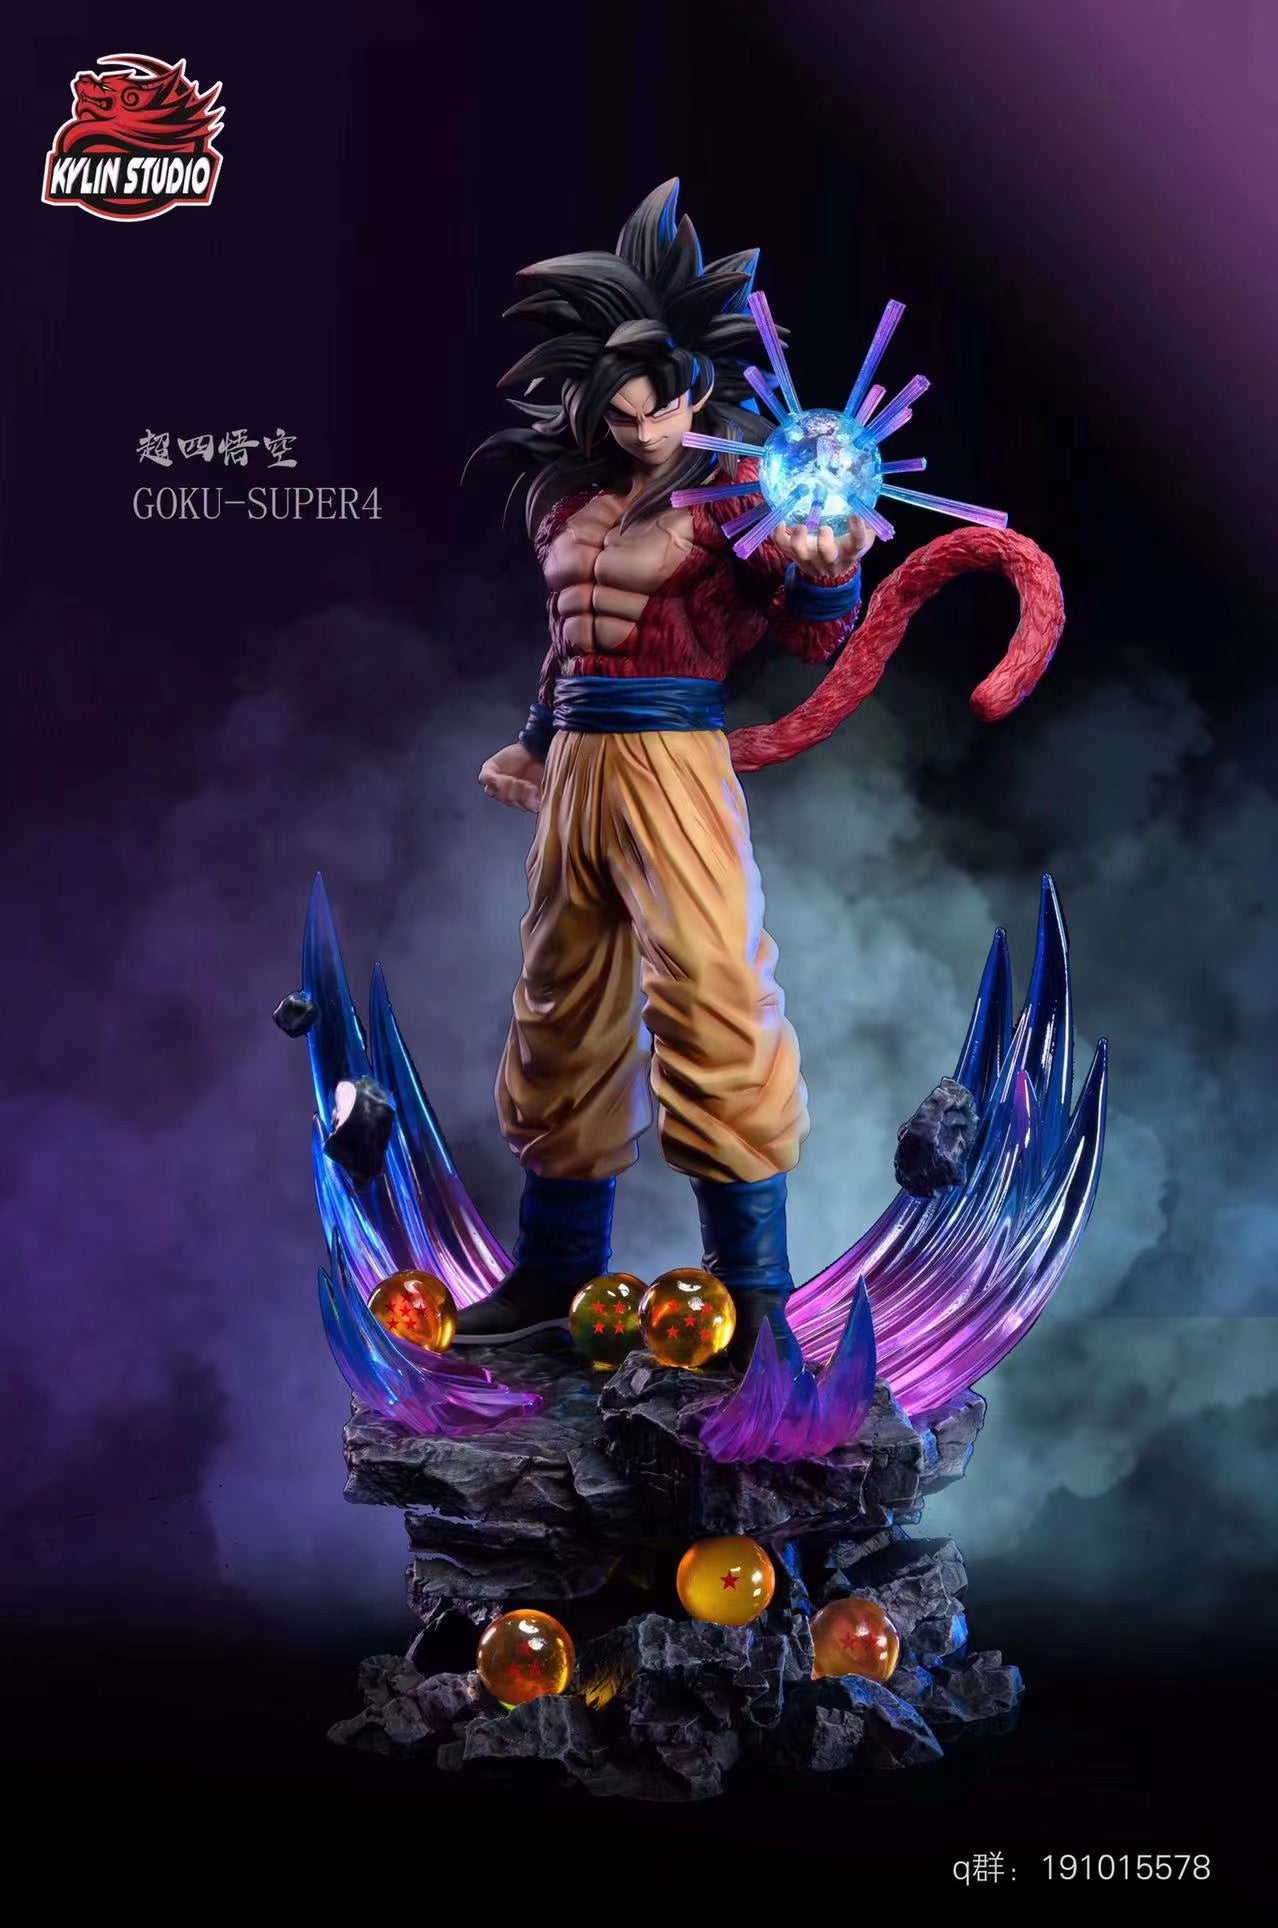 Sky Top Studio - Son Goku Super Saiyan 4 [1/6 scale] – Avolounge